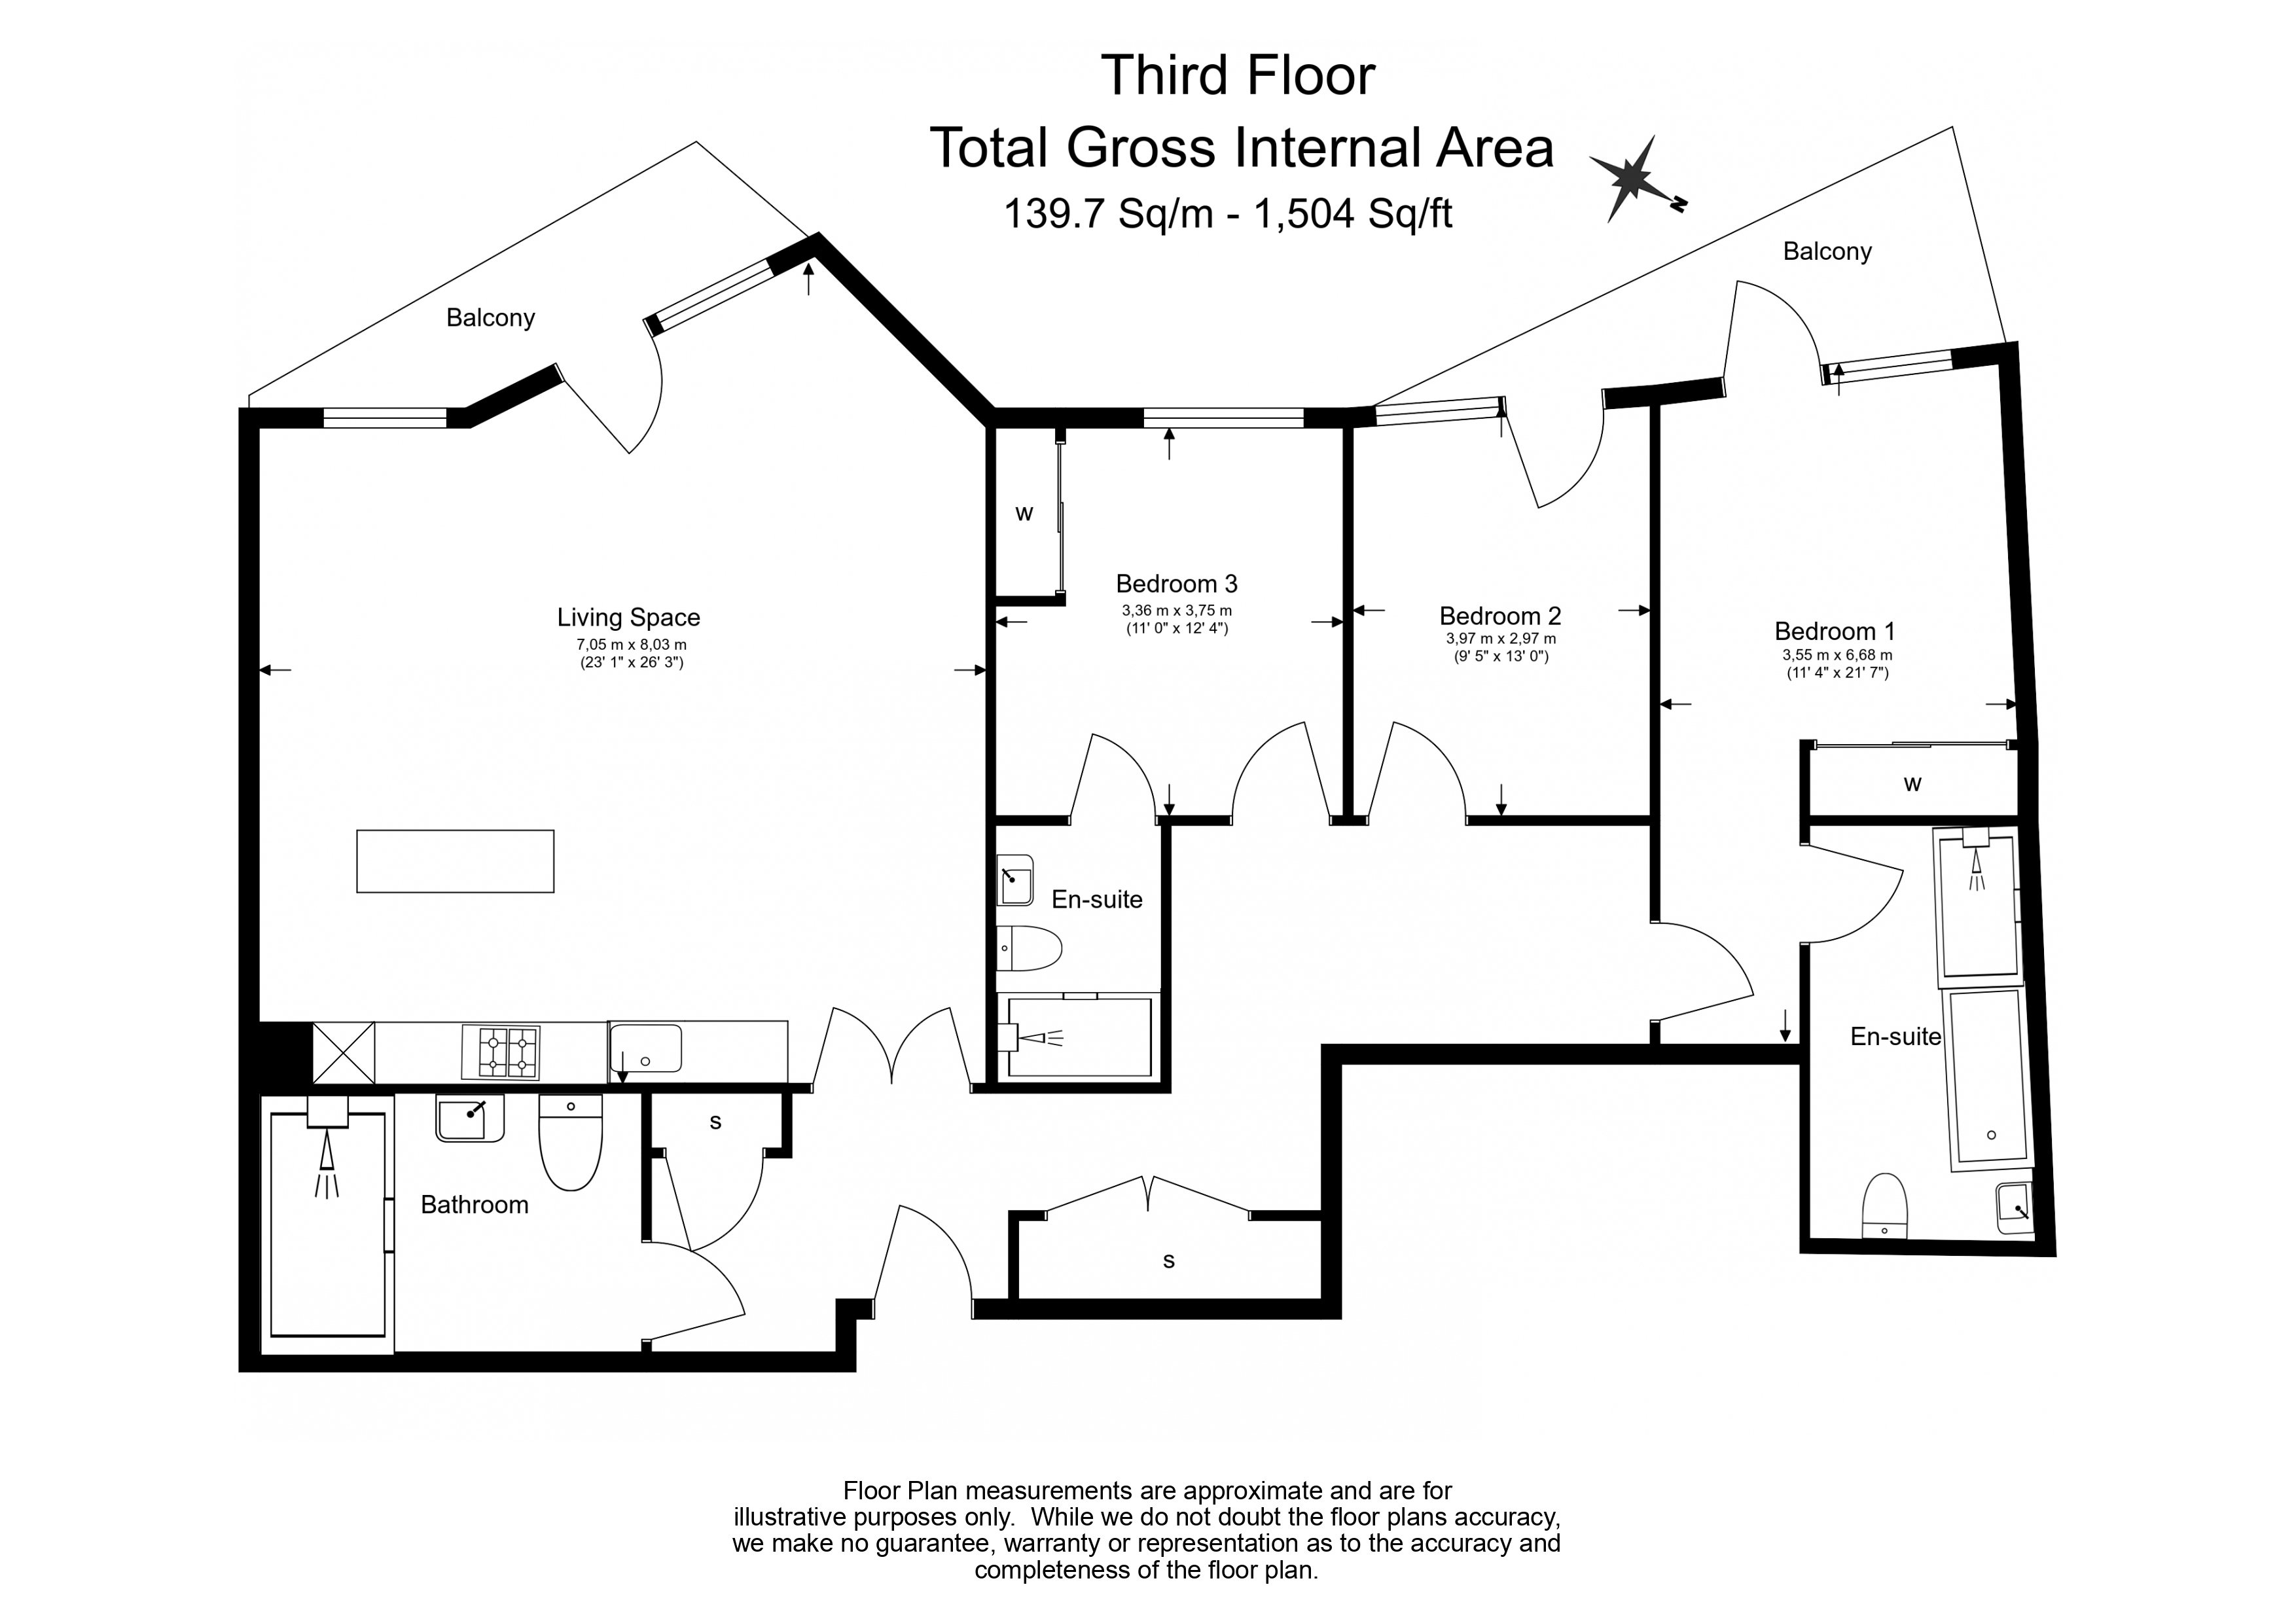 3 bedrooms flat to rent in Kew Bridge Road, Brentford, TW8-Floorplan